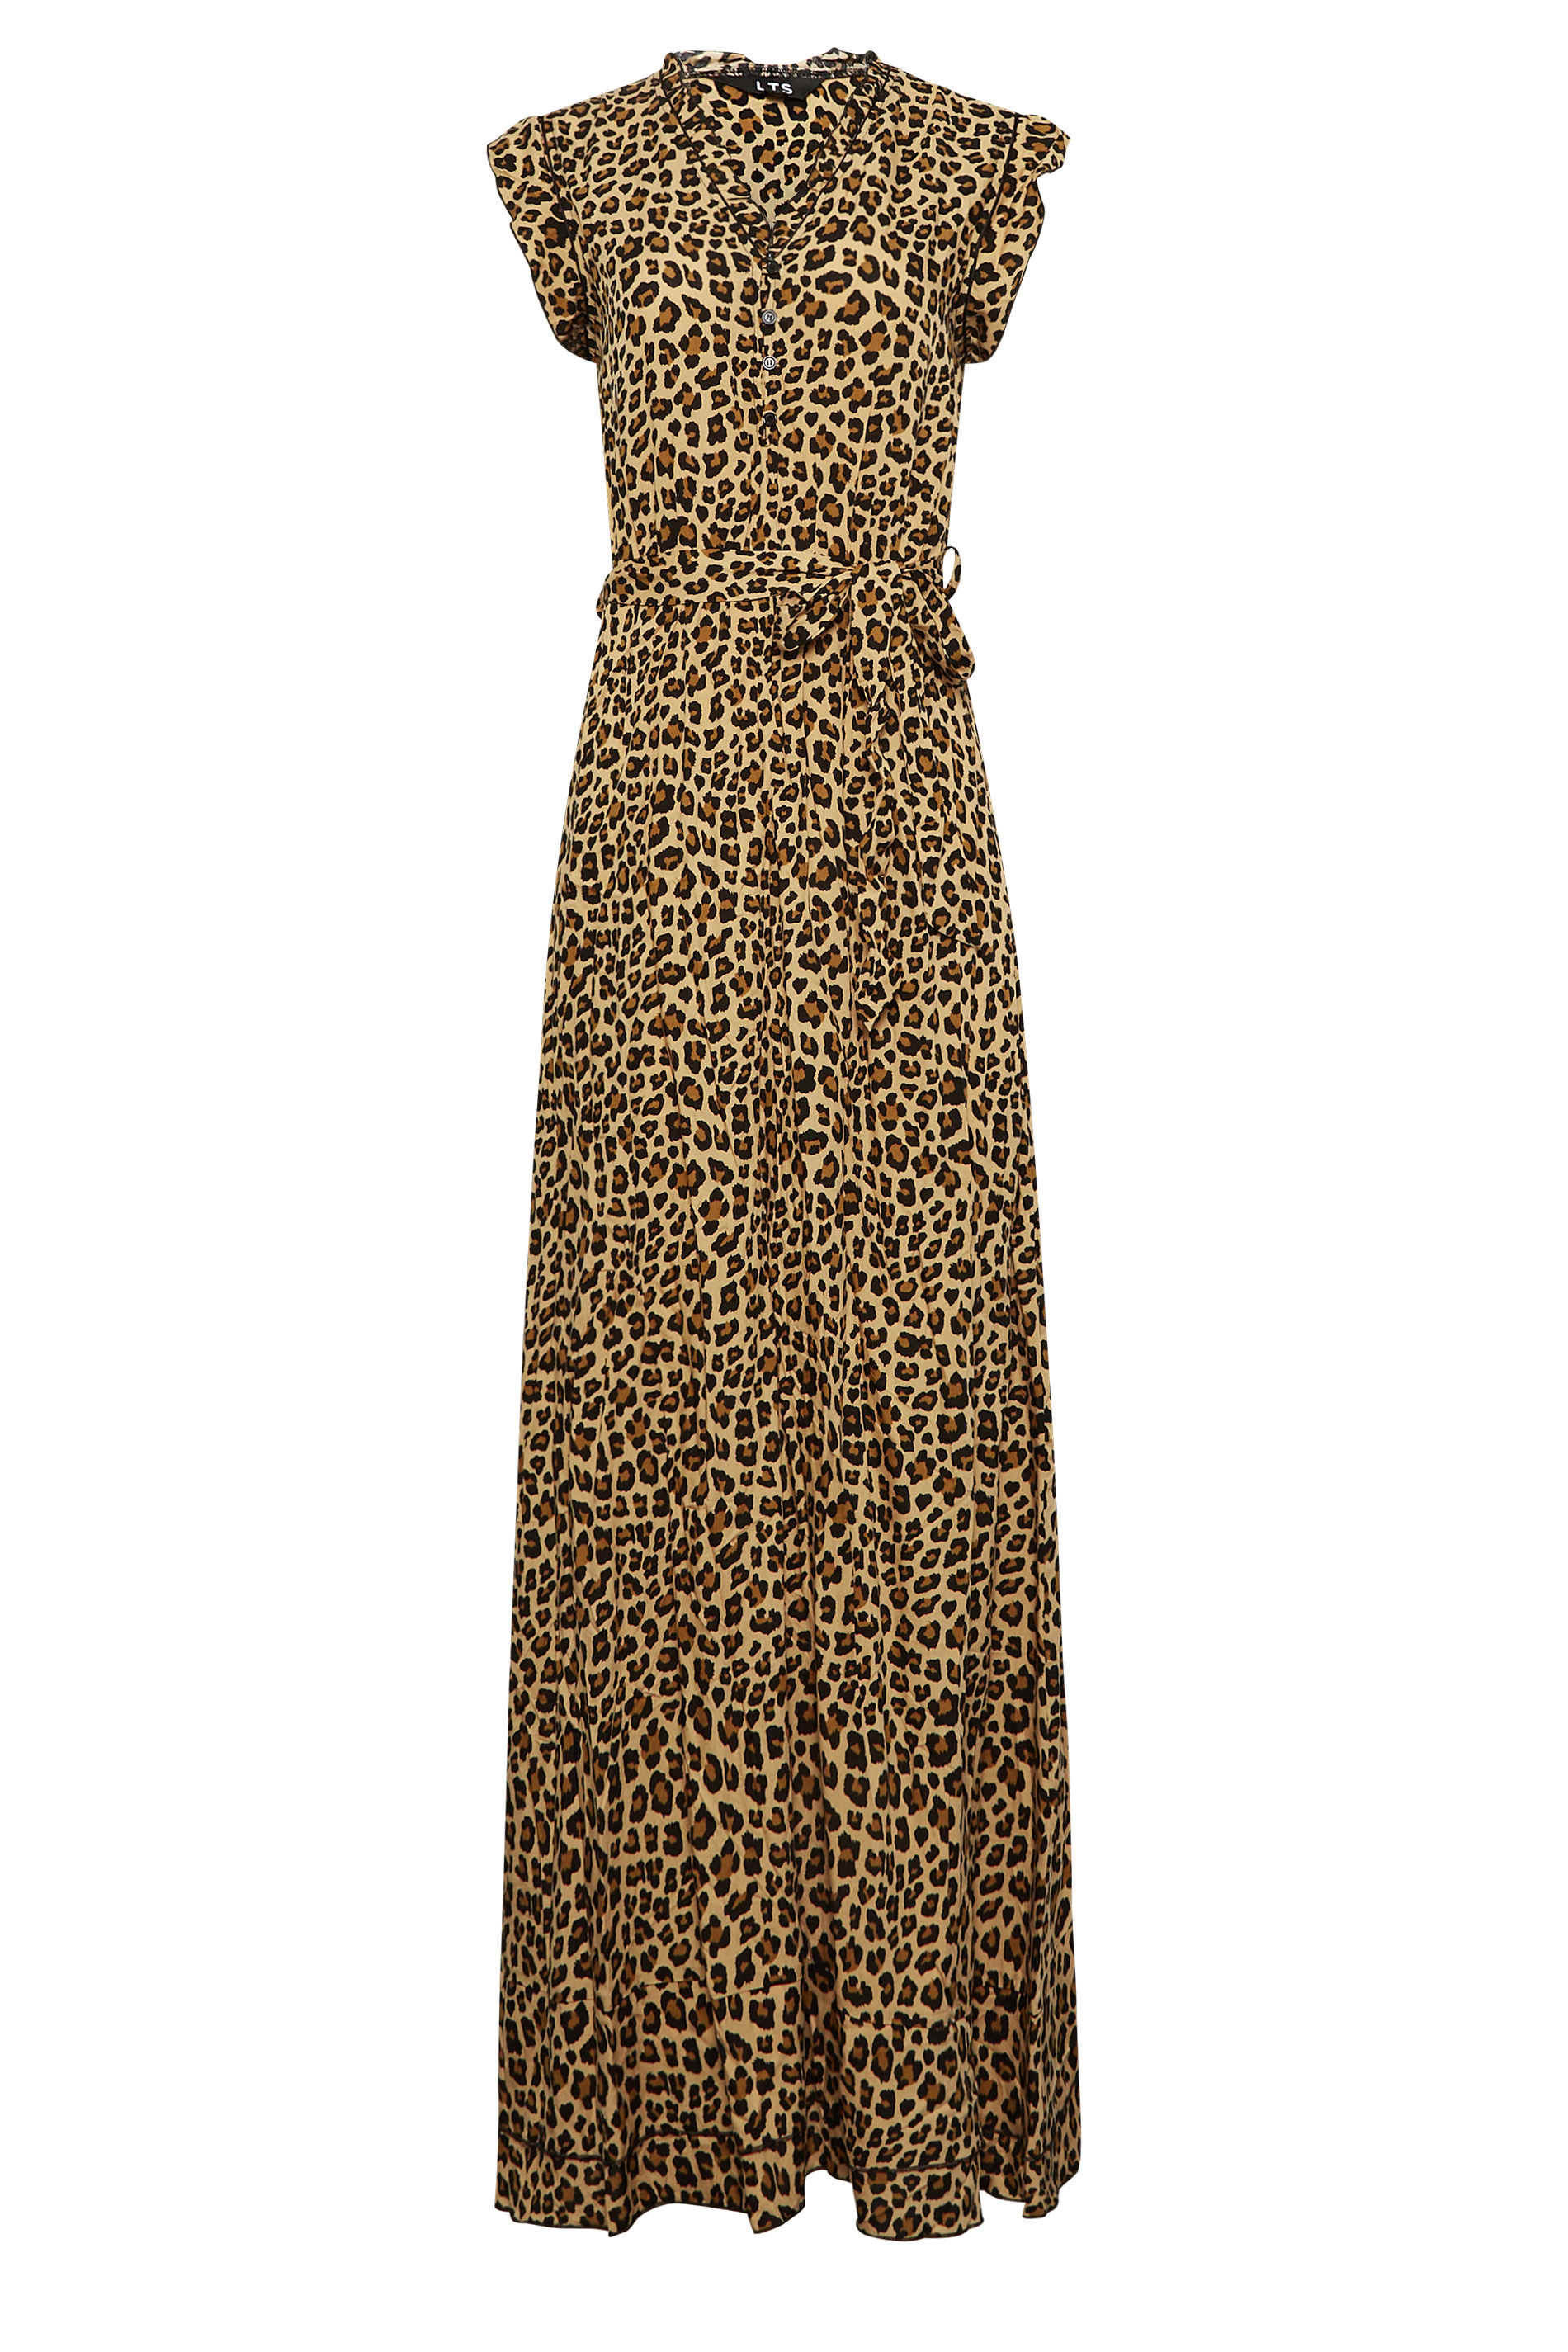 LTS Tall Women's Brown Animal Print Frill Sleeve Maxi Dress | Long Tall Sally 2